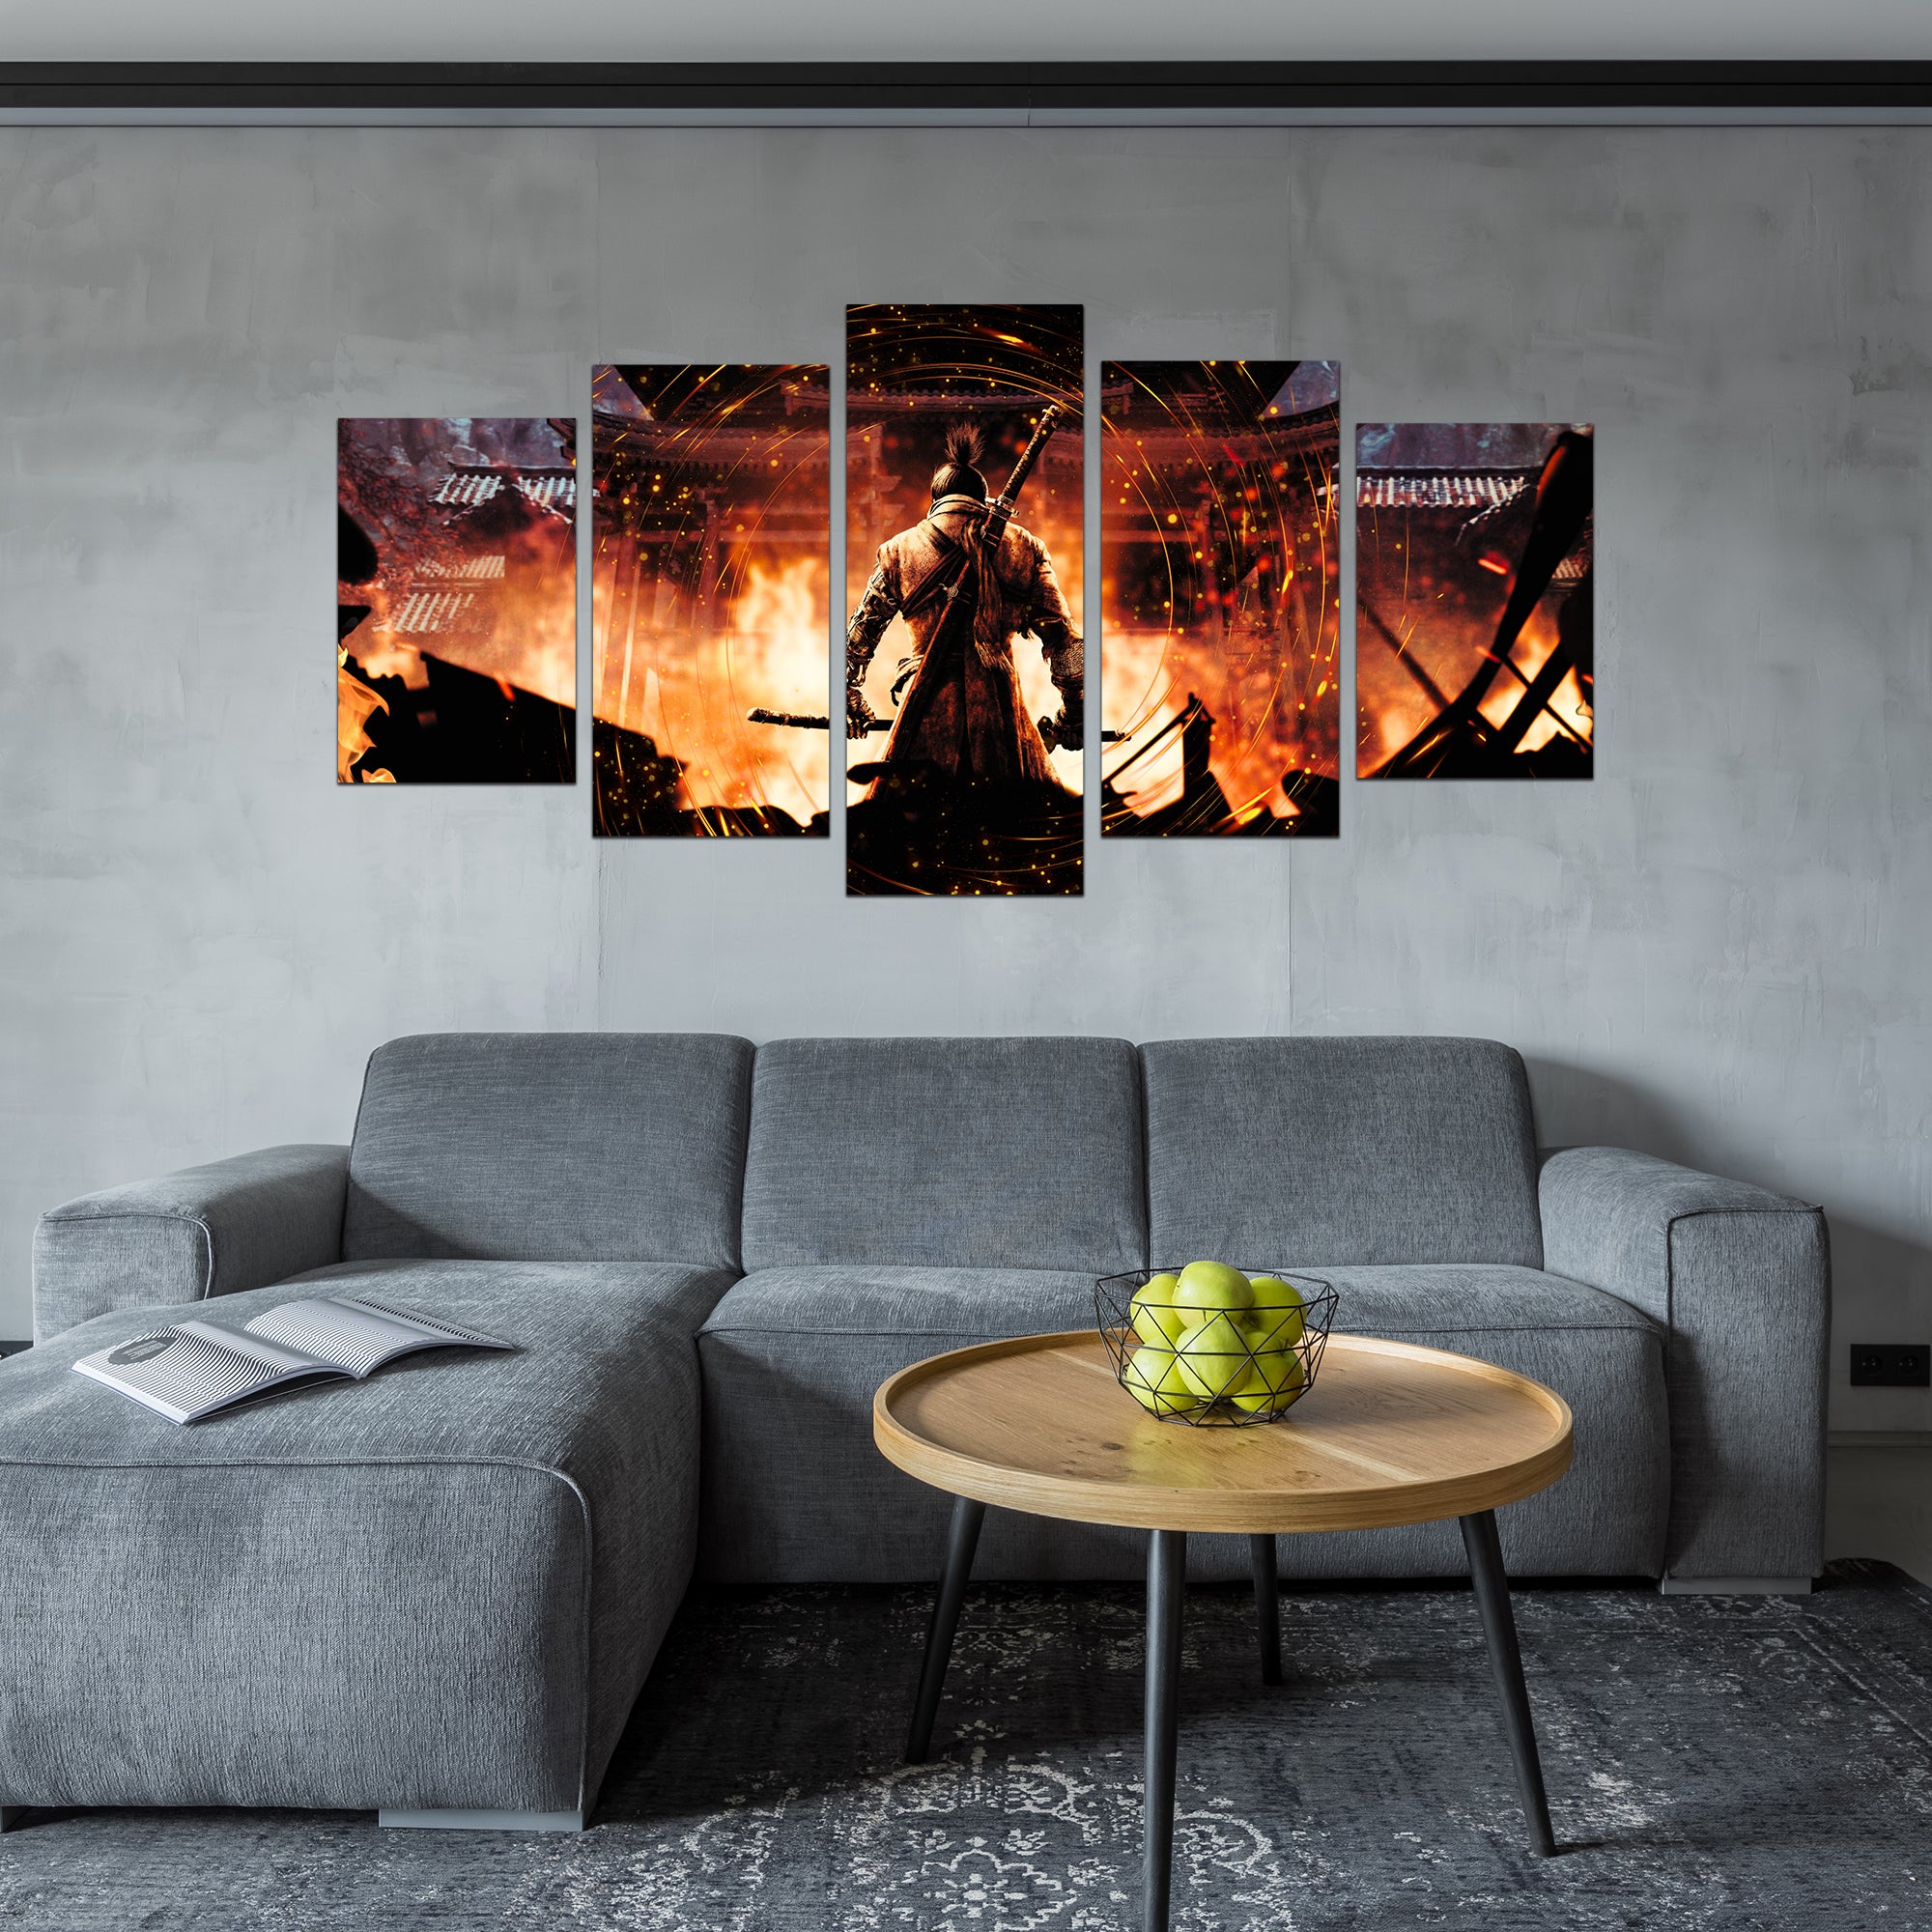 Sekiro-Inspired Wall Canvas Set - Captivating Battle Scenes, High-Quality Print Resolution